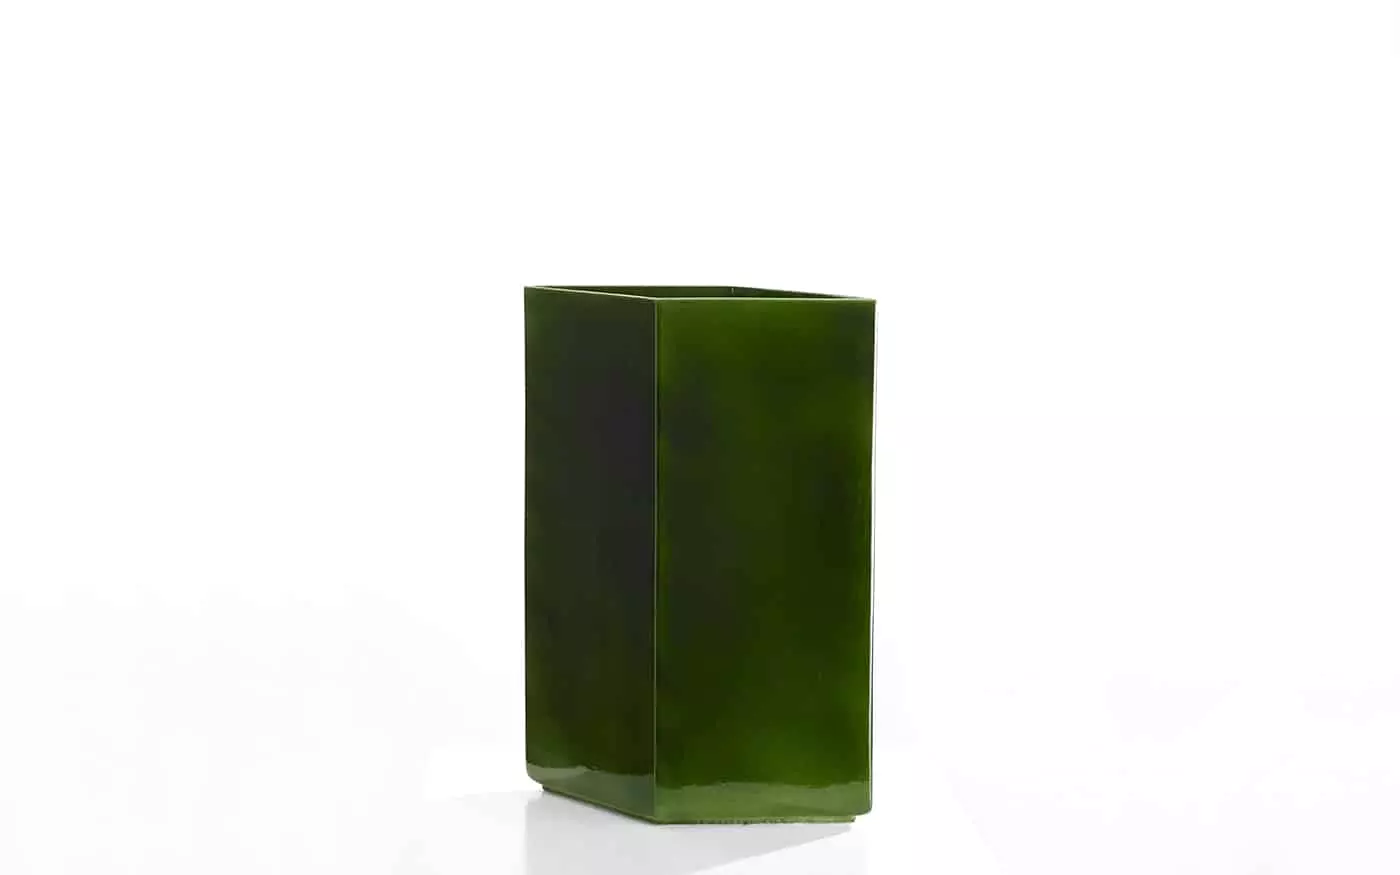 Vase Losange 67 green - Ronan & Erwan Bouroullec - Pendant light - Galerie kreo